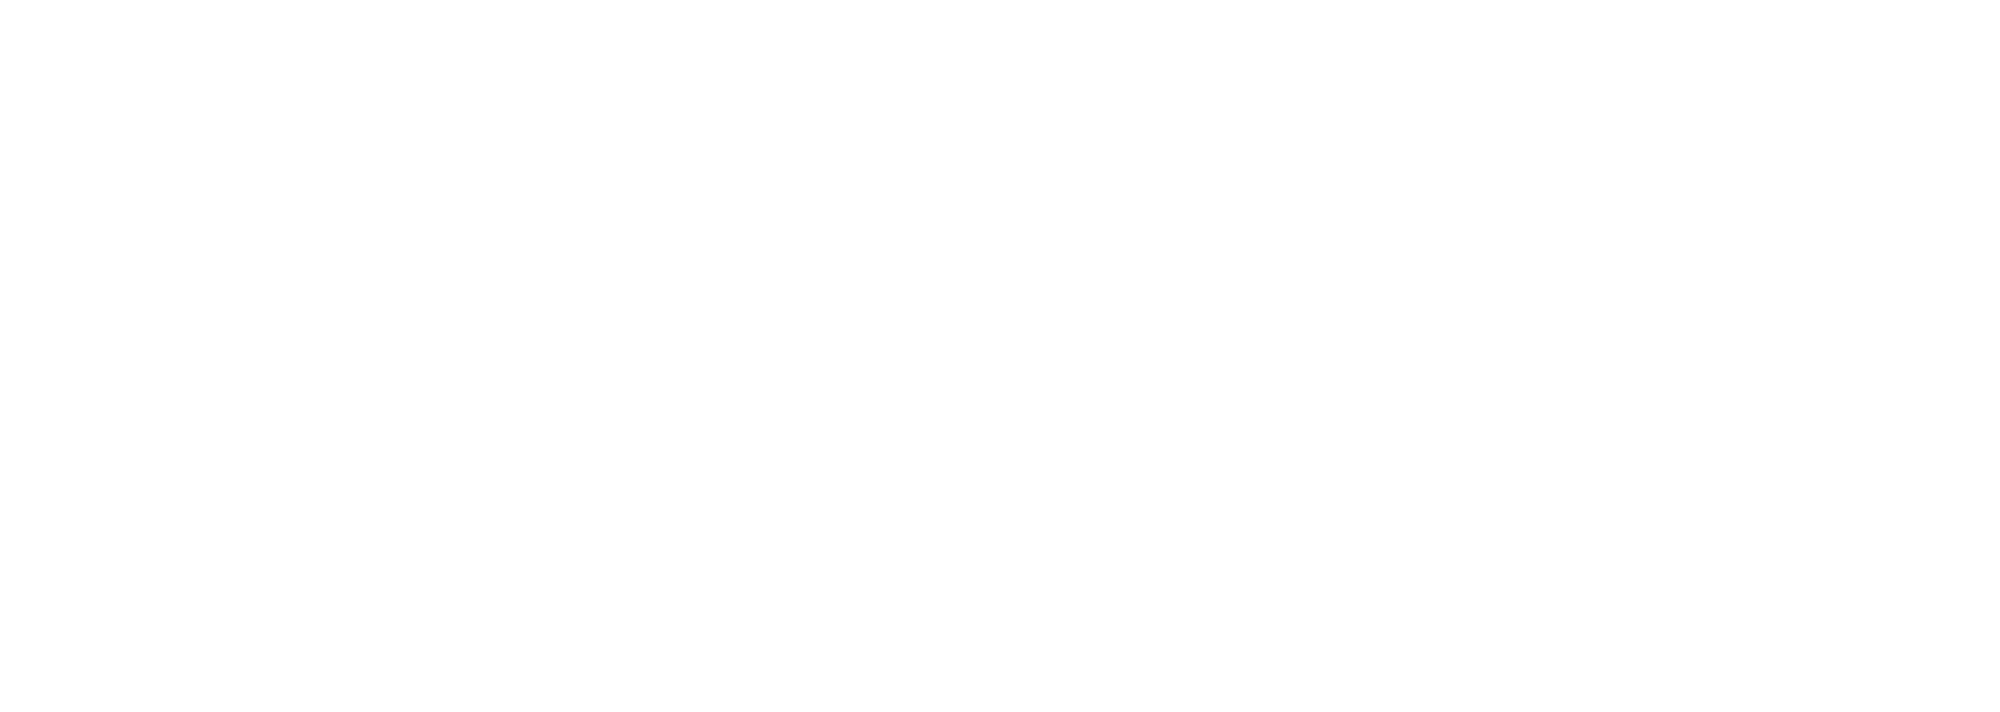 Cory Cat Fish